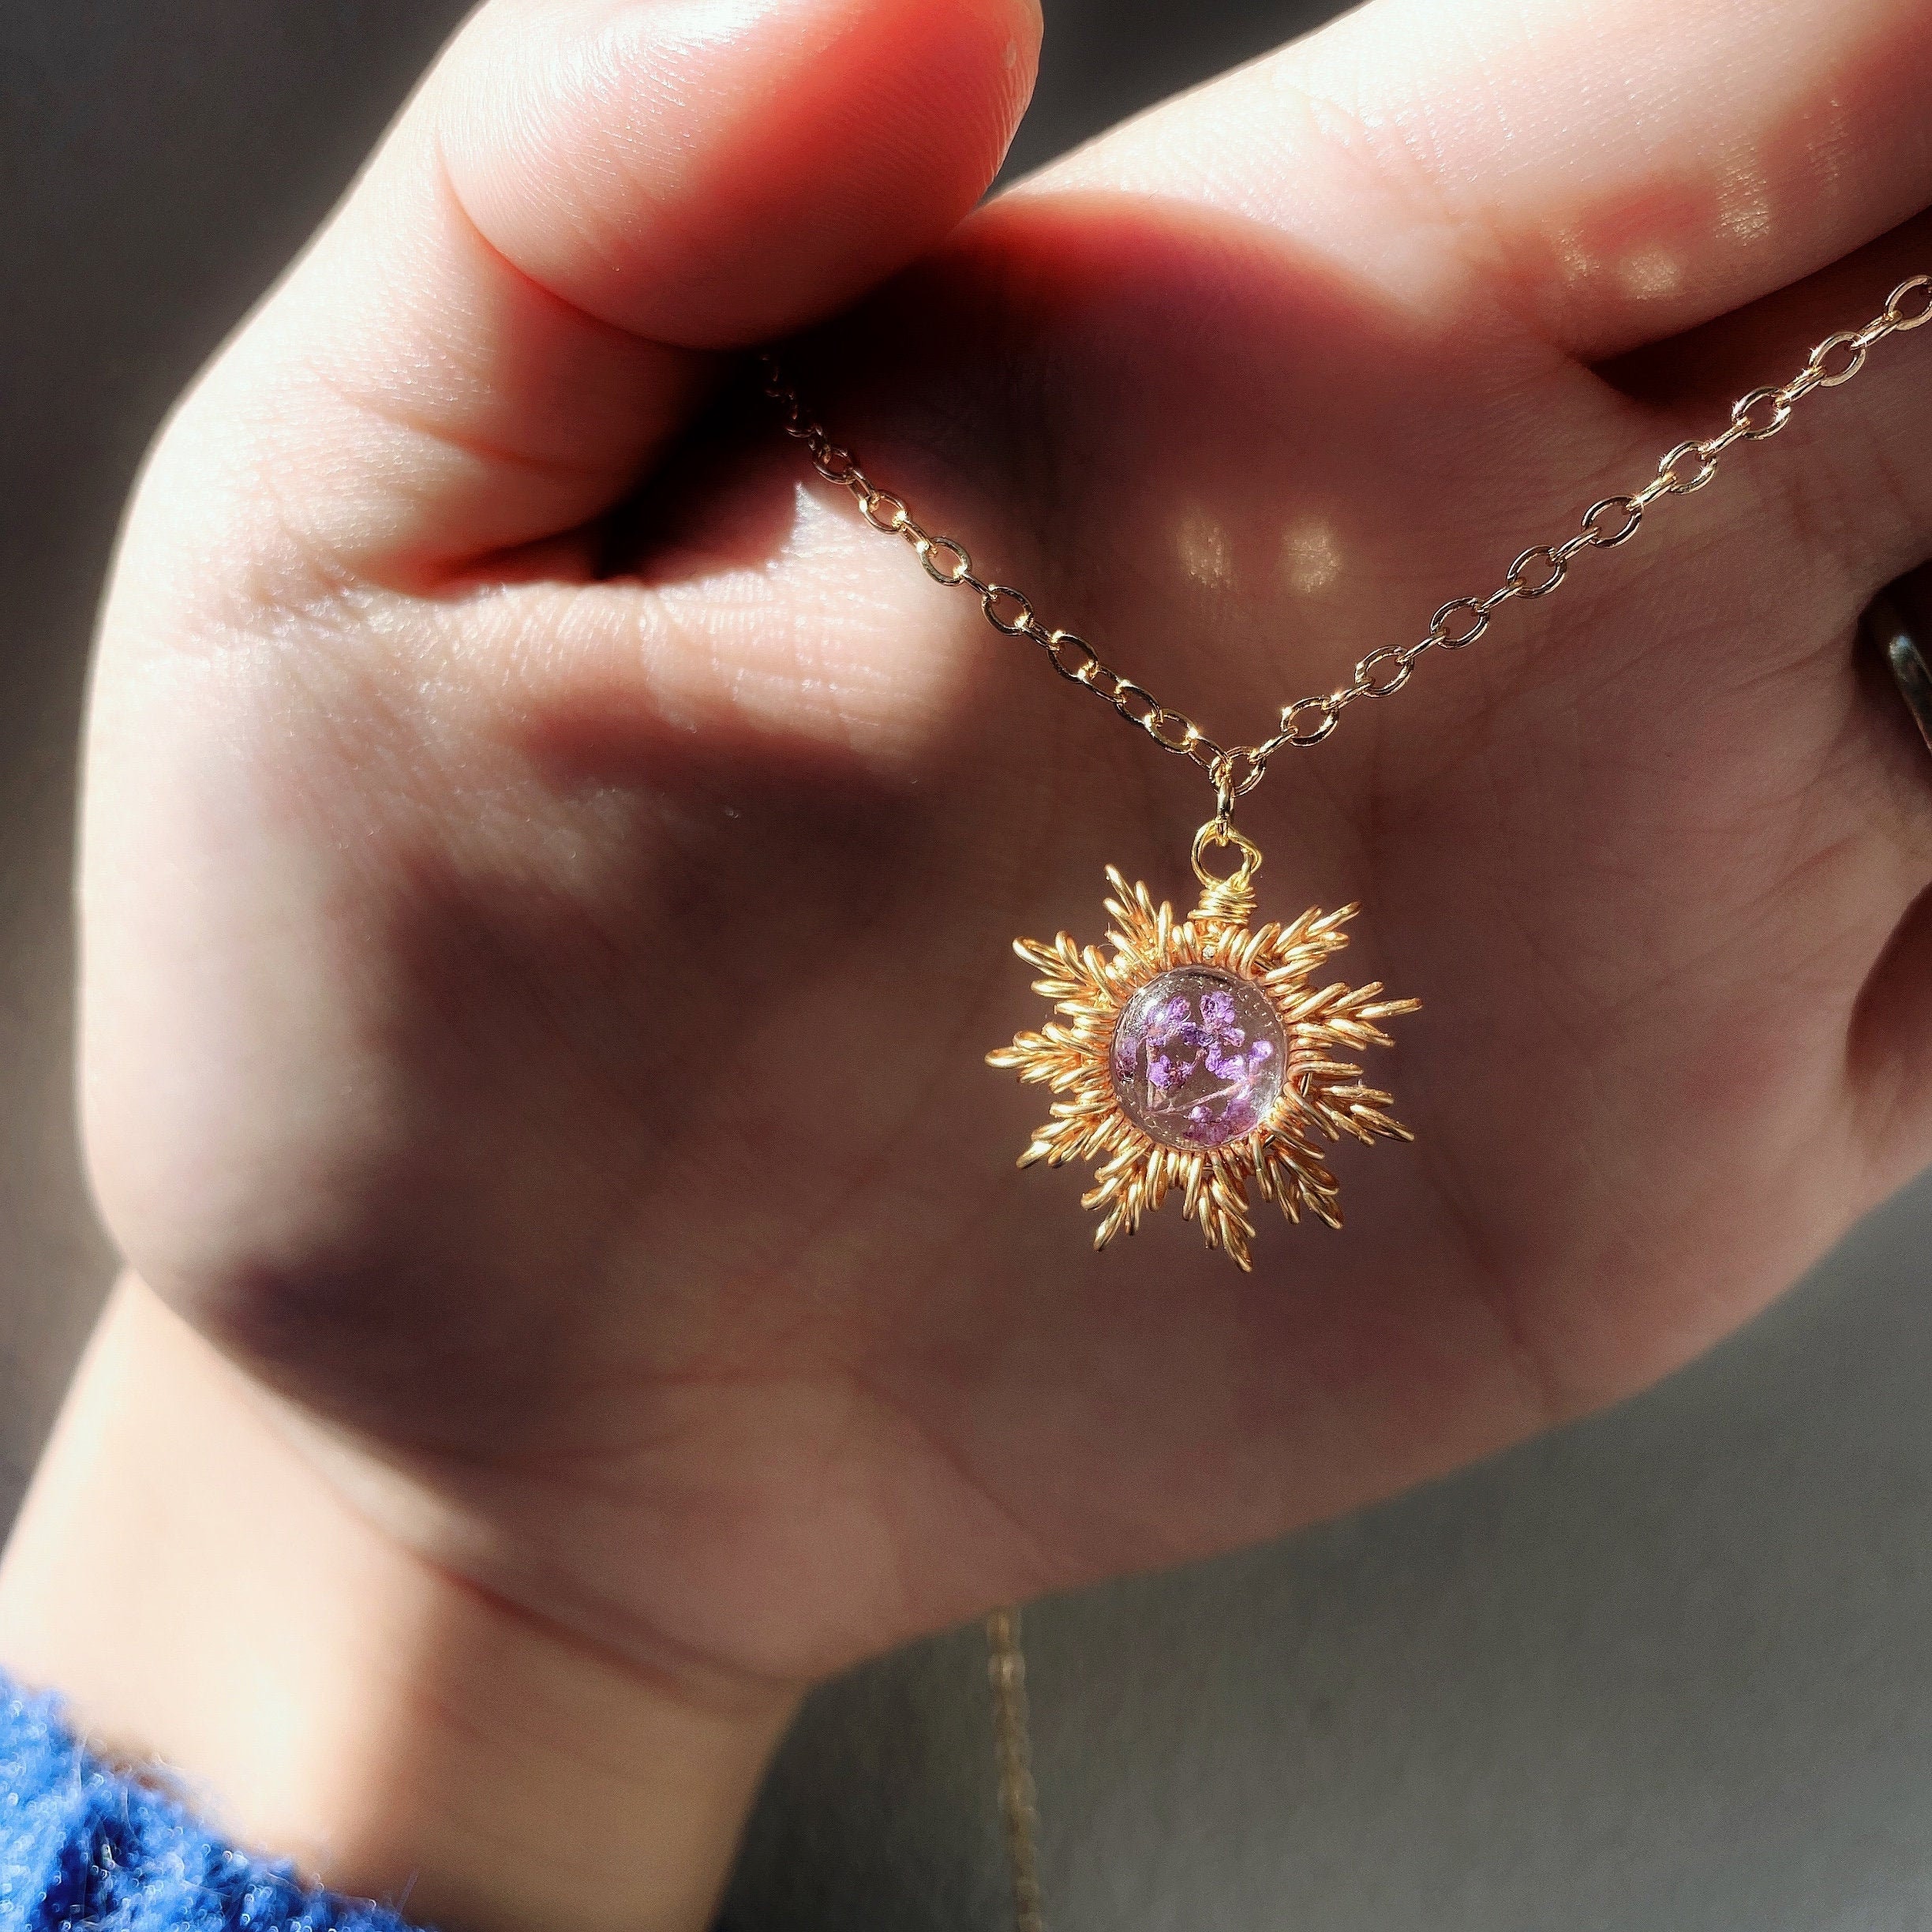 Tangled Necklace - Shop on Pinterest